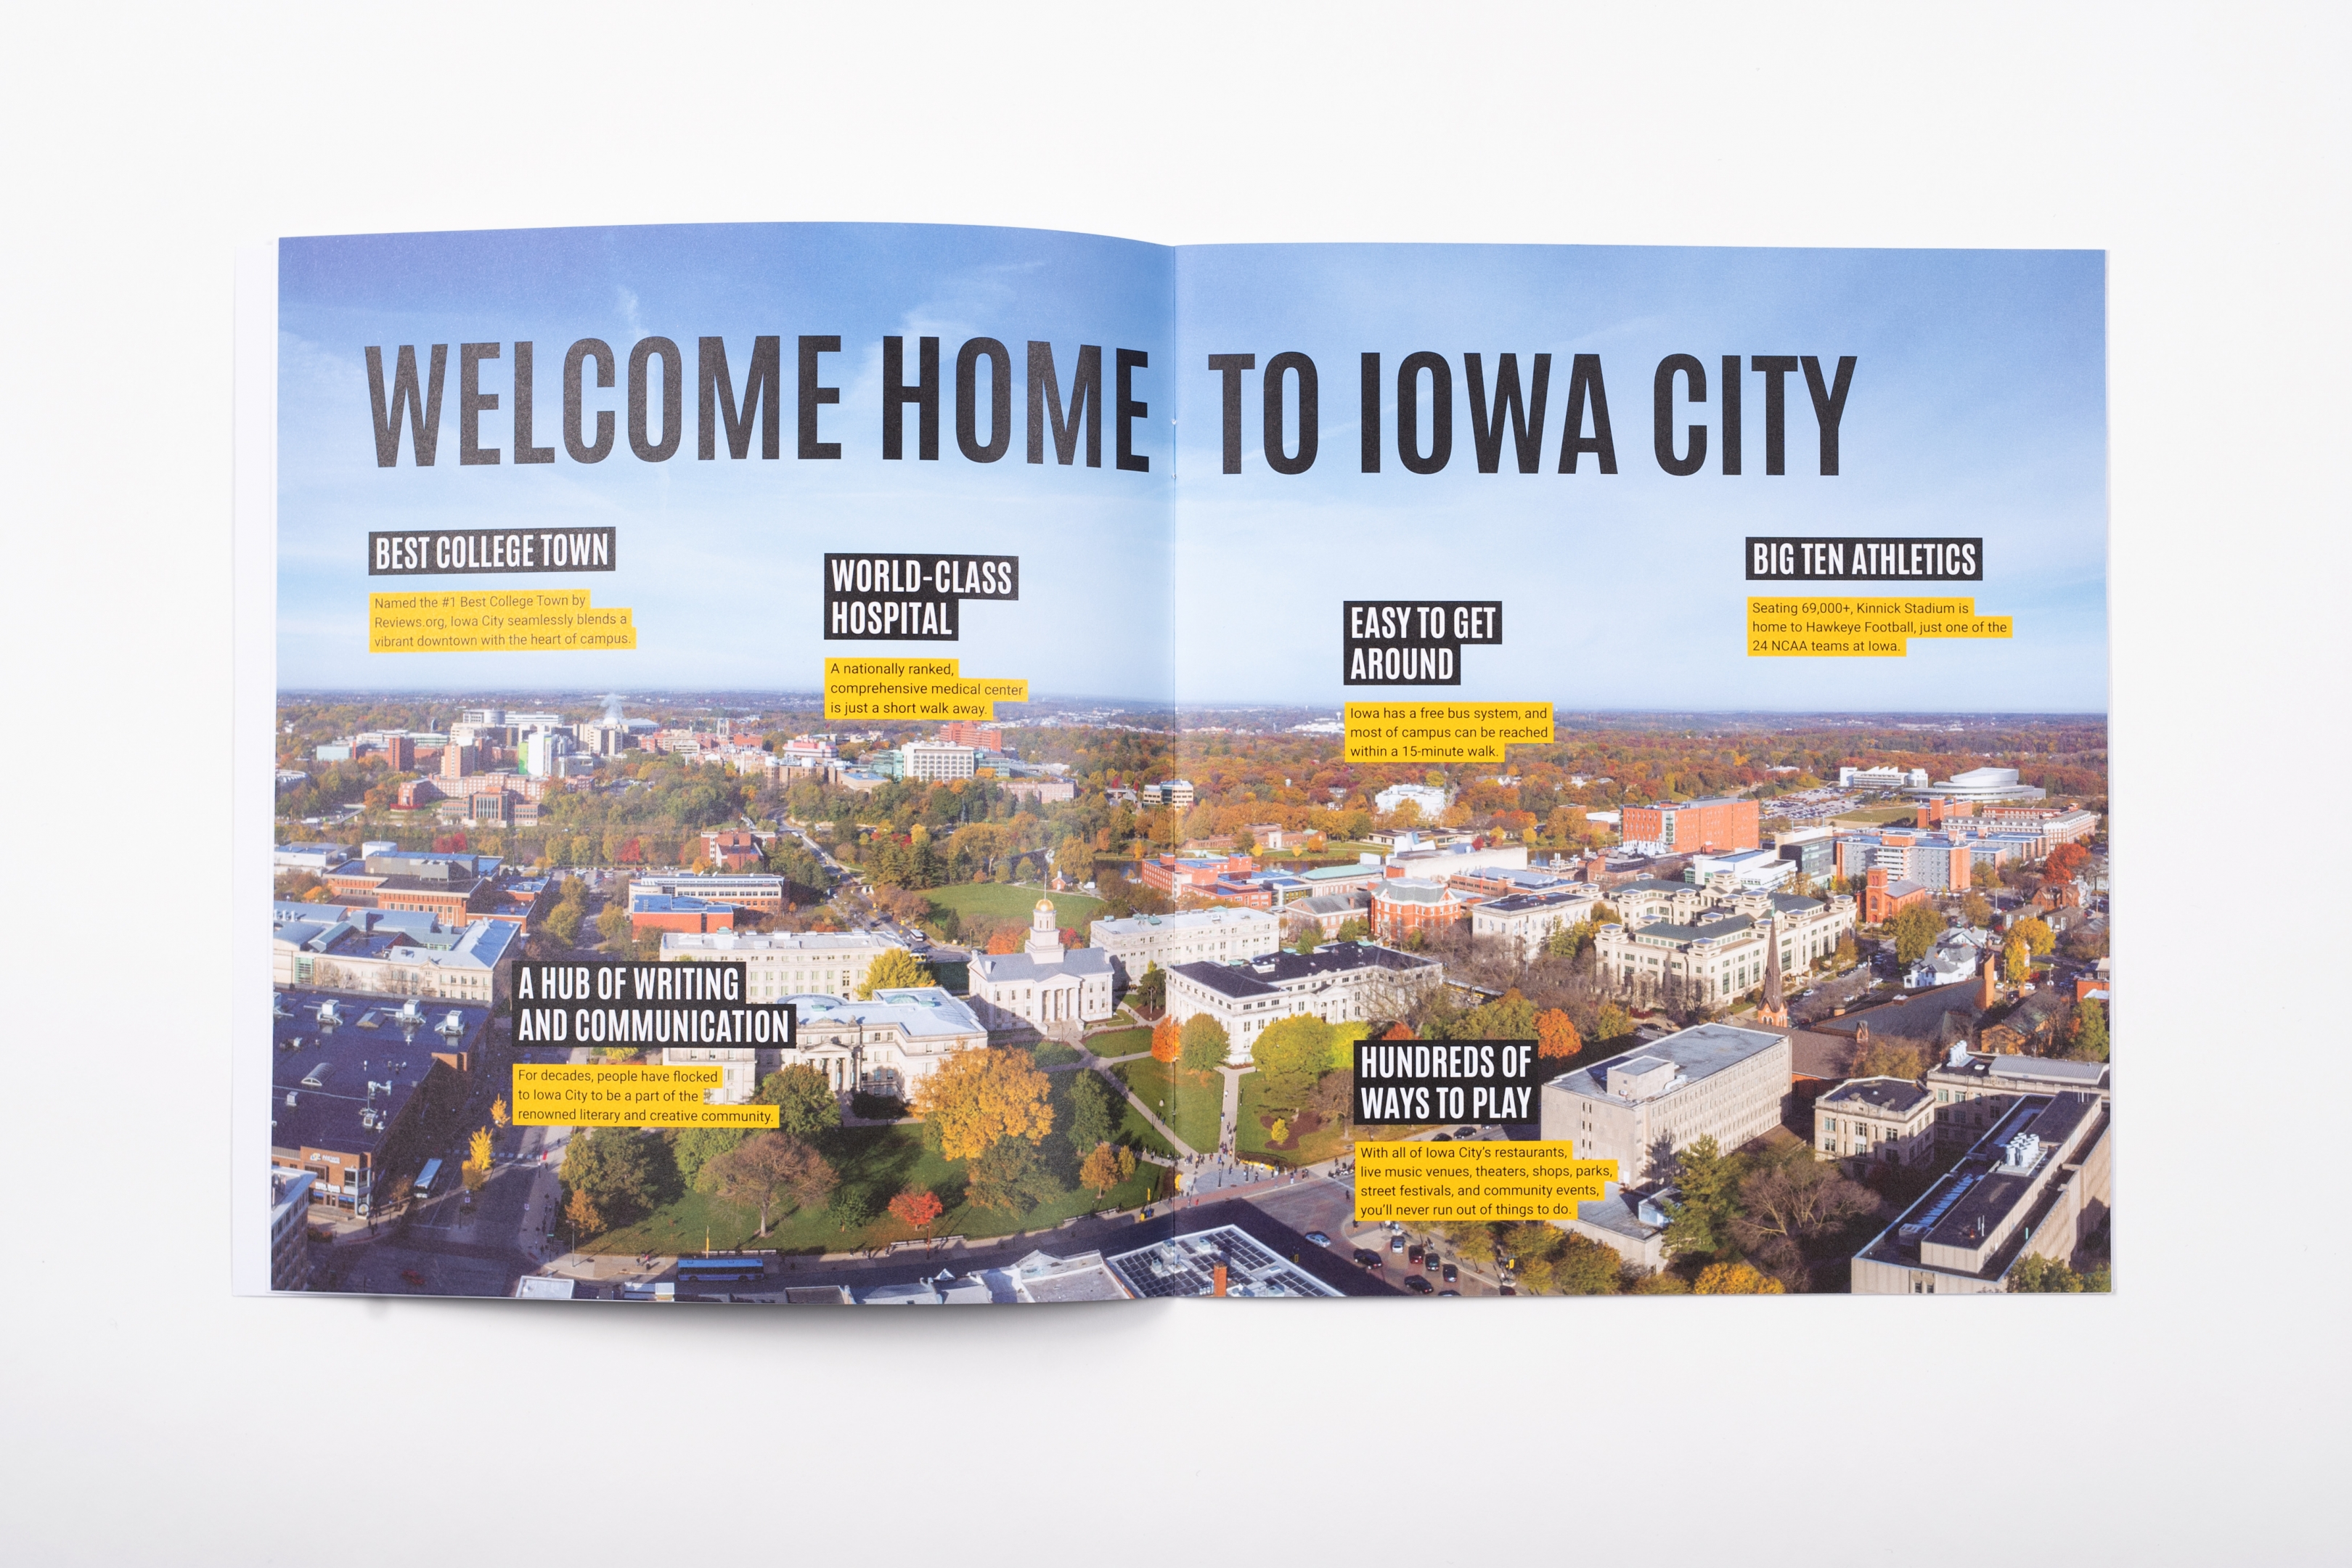 Welcome to Iowa City - highlights of Iowa